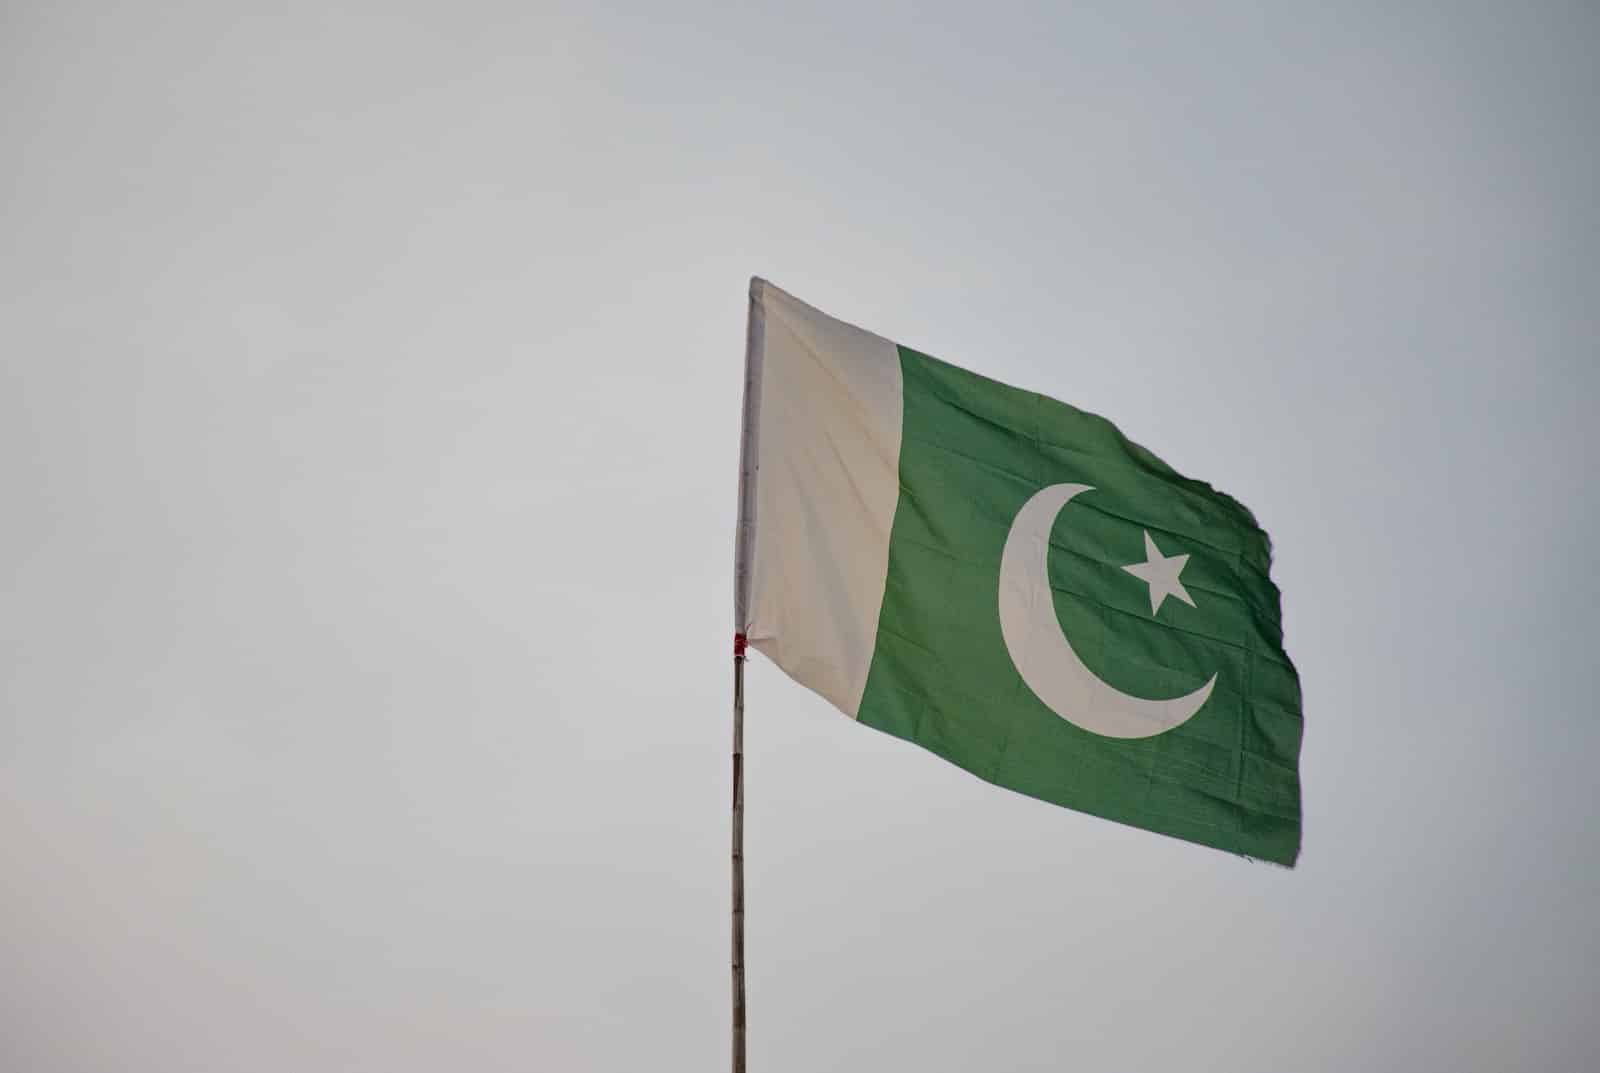 UK Bar Council raises concern over treatment of Ahmadi Muslim lawyers in Pakistan